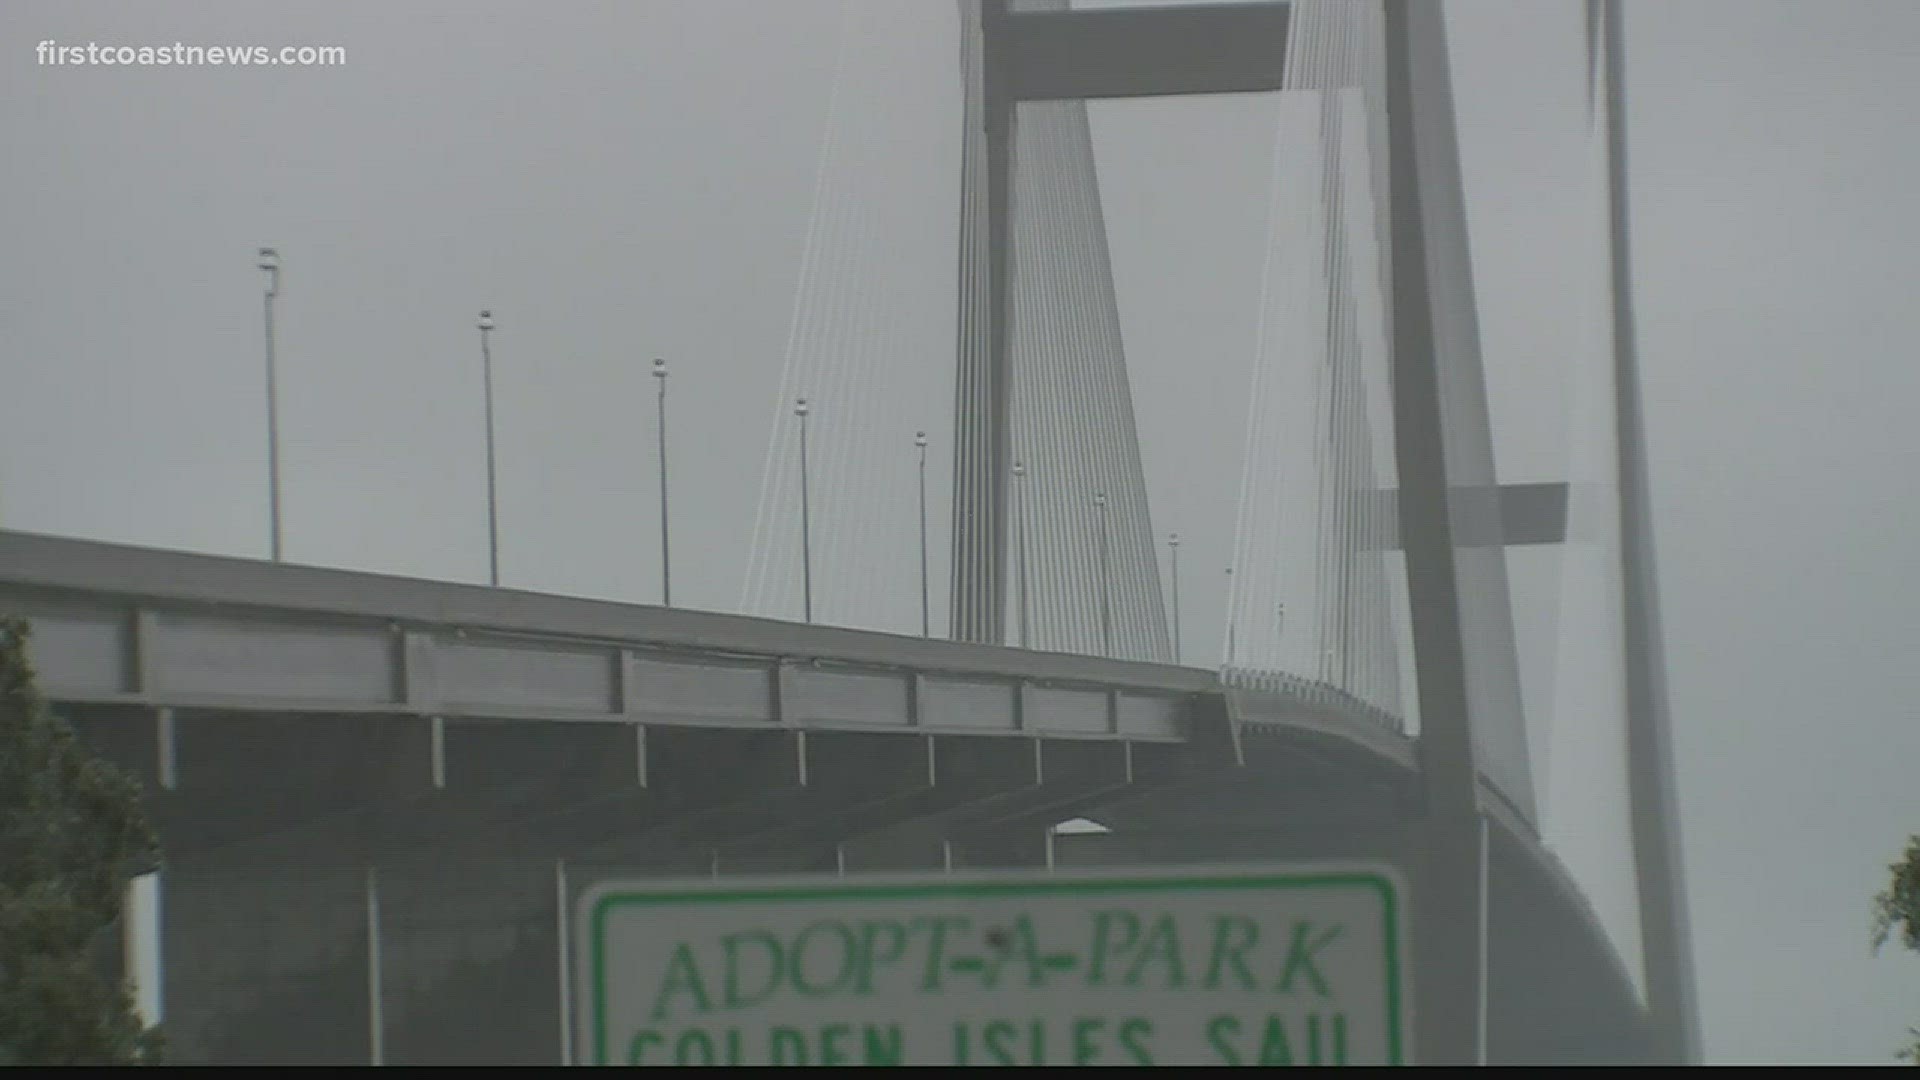 The Georgia Department of Transportation shut down the bridge due to falling ice.